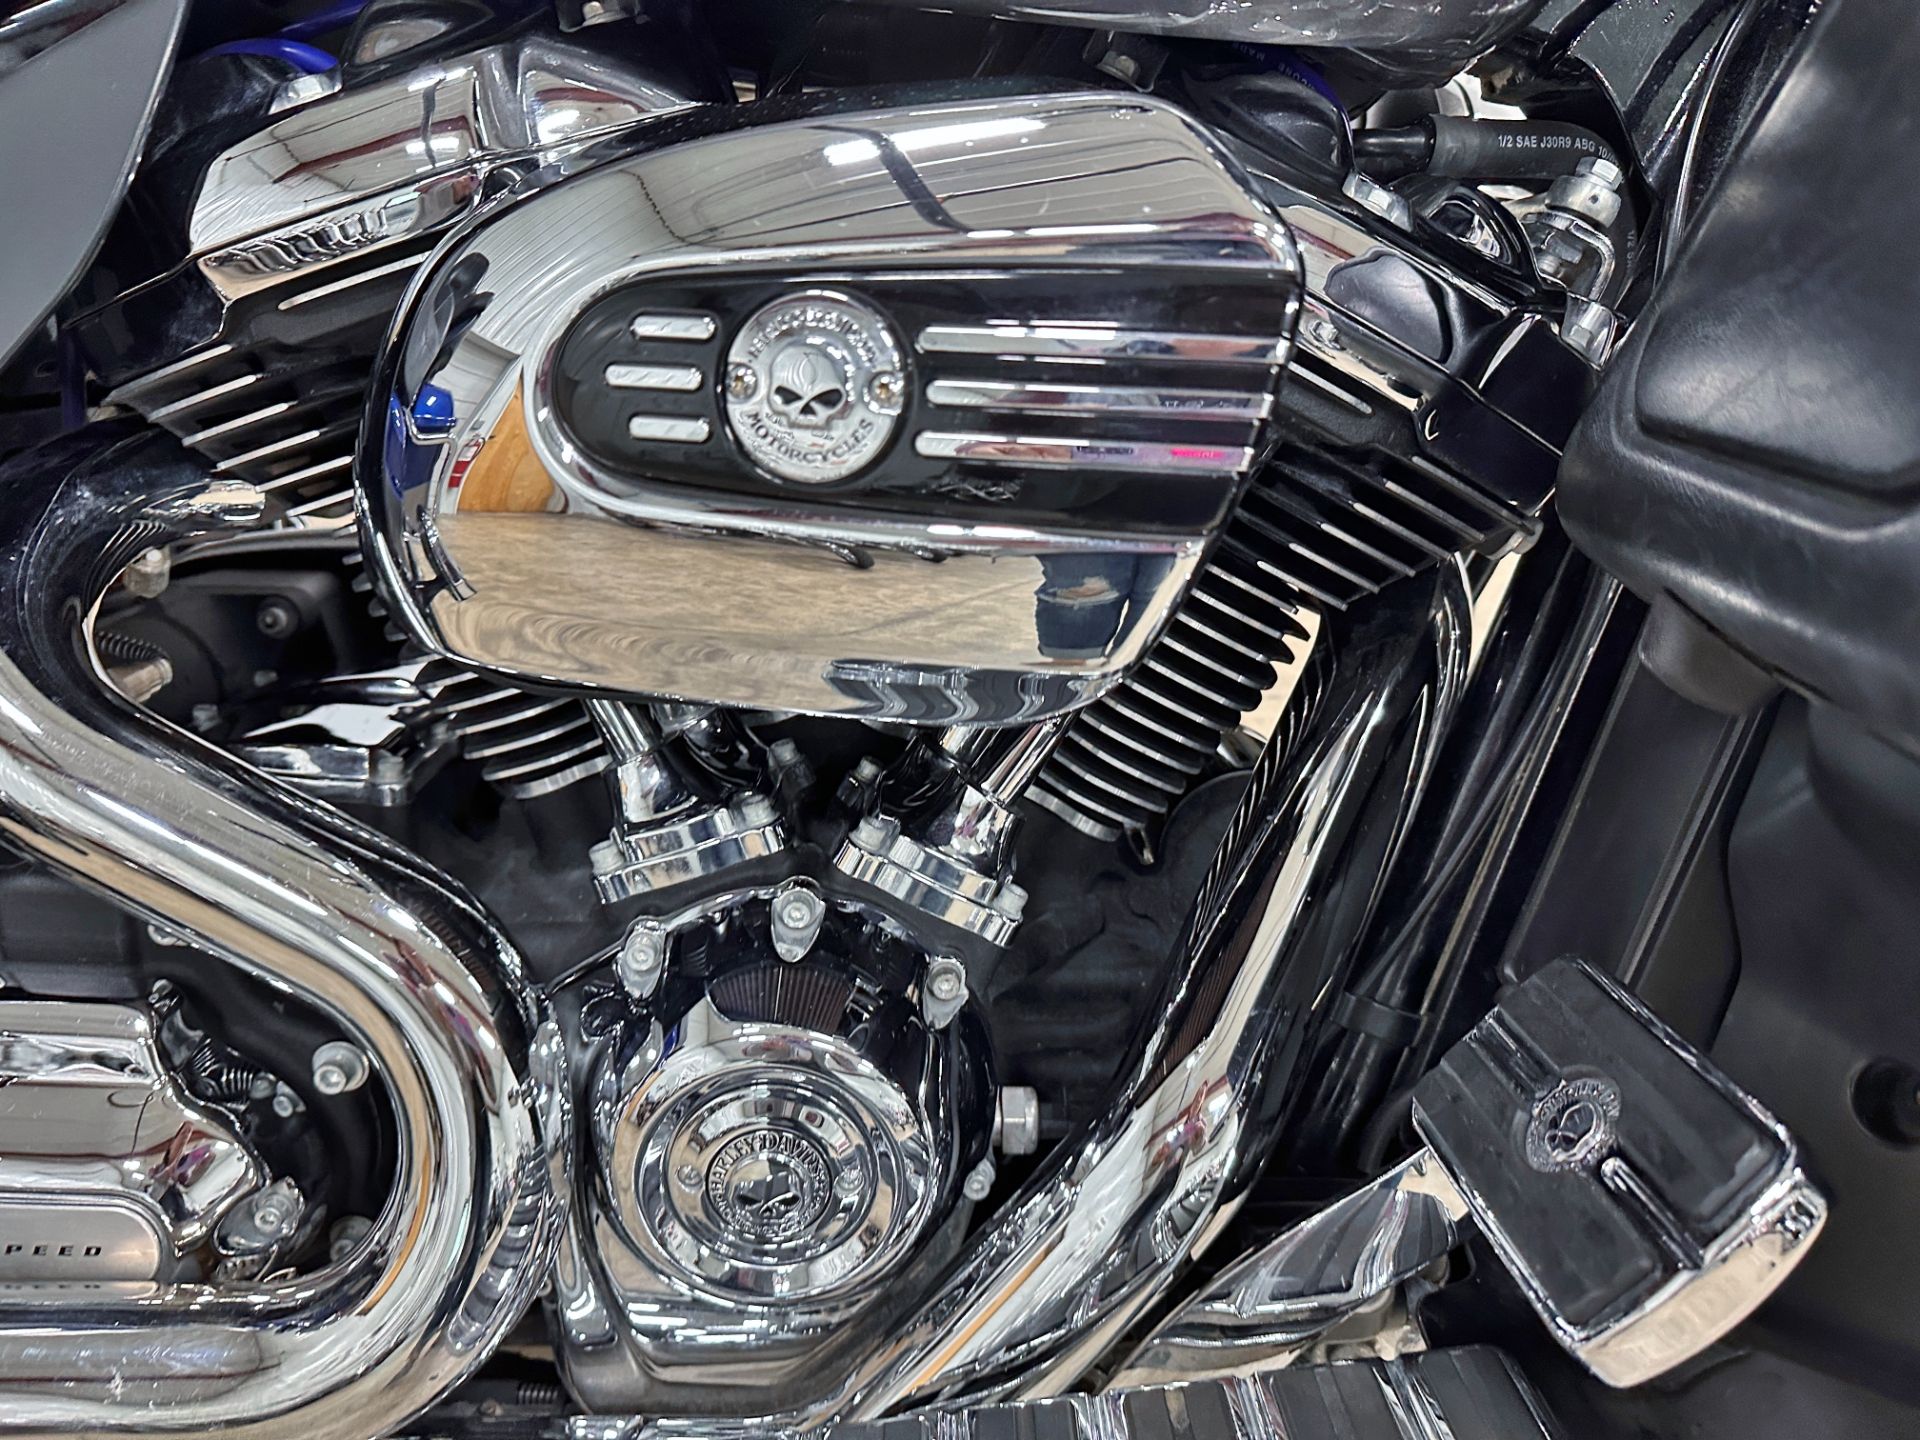 2017 Harley-Davidson Electra Glide® Ultra Classic® in Sandusky, Ohio - Photo 2